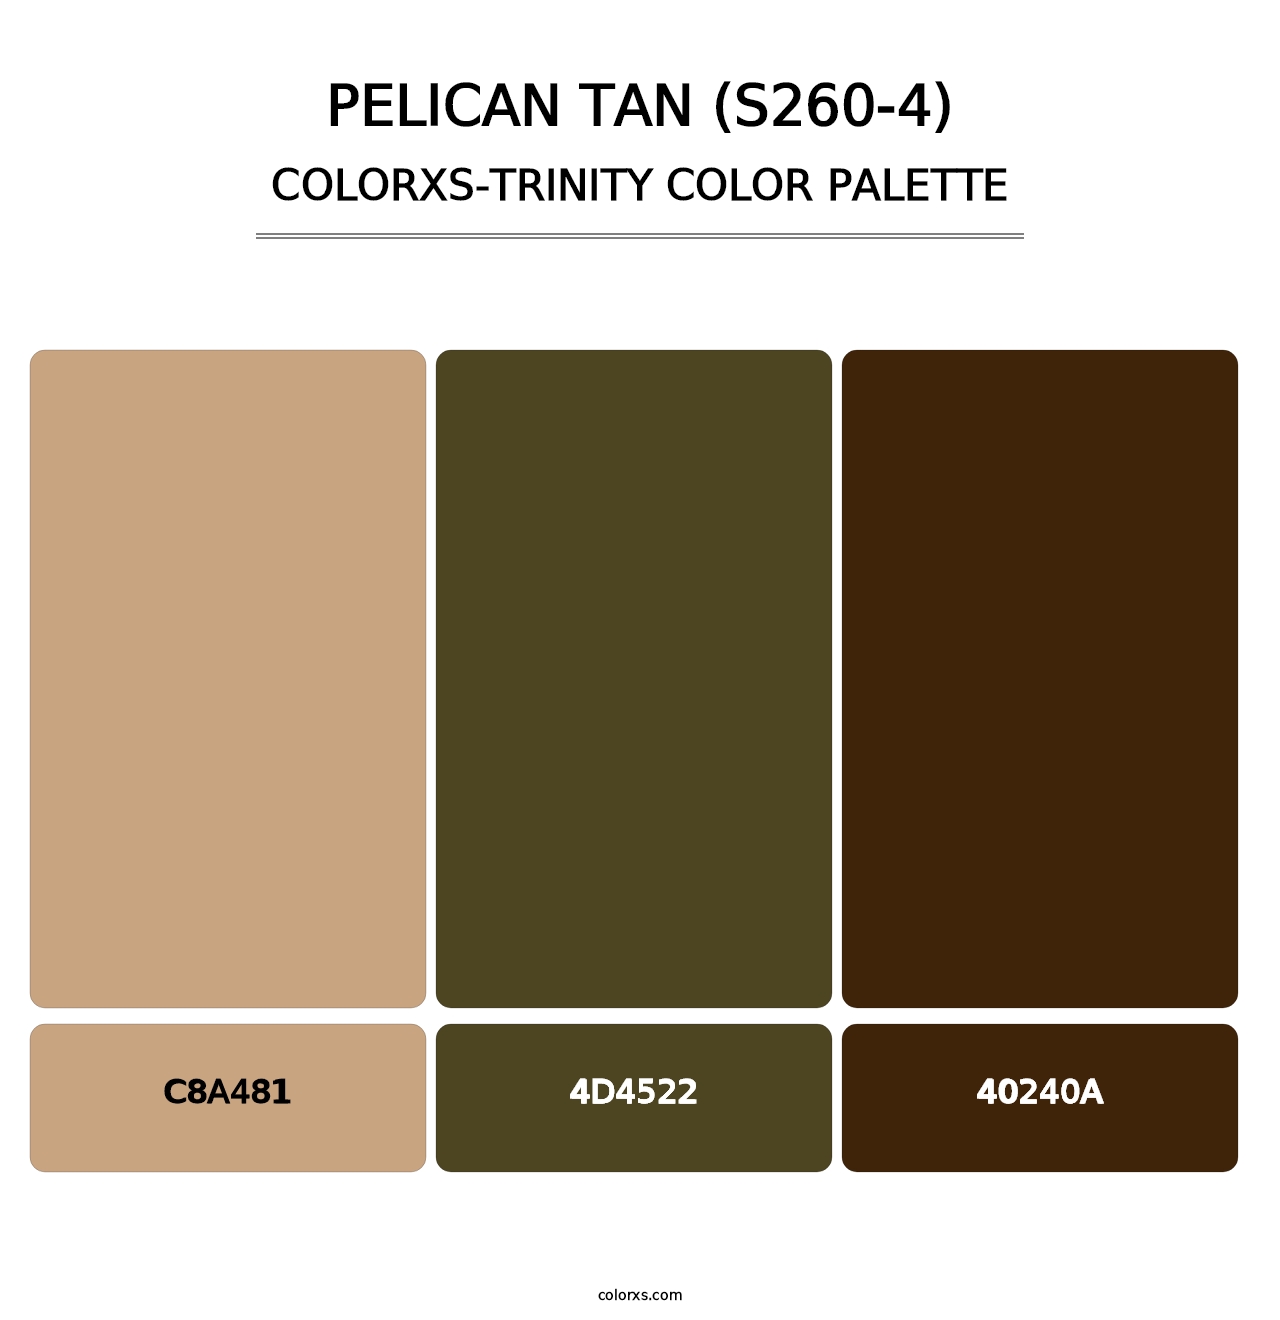 Pelican Tan (S260-4) - Colorxs Trinity Palette